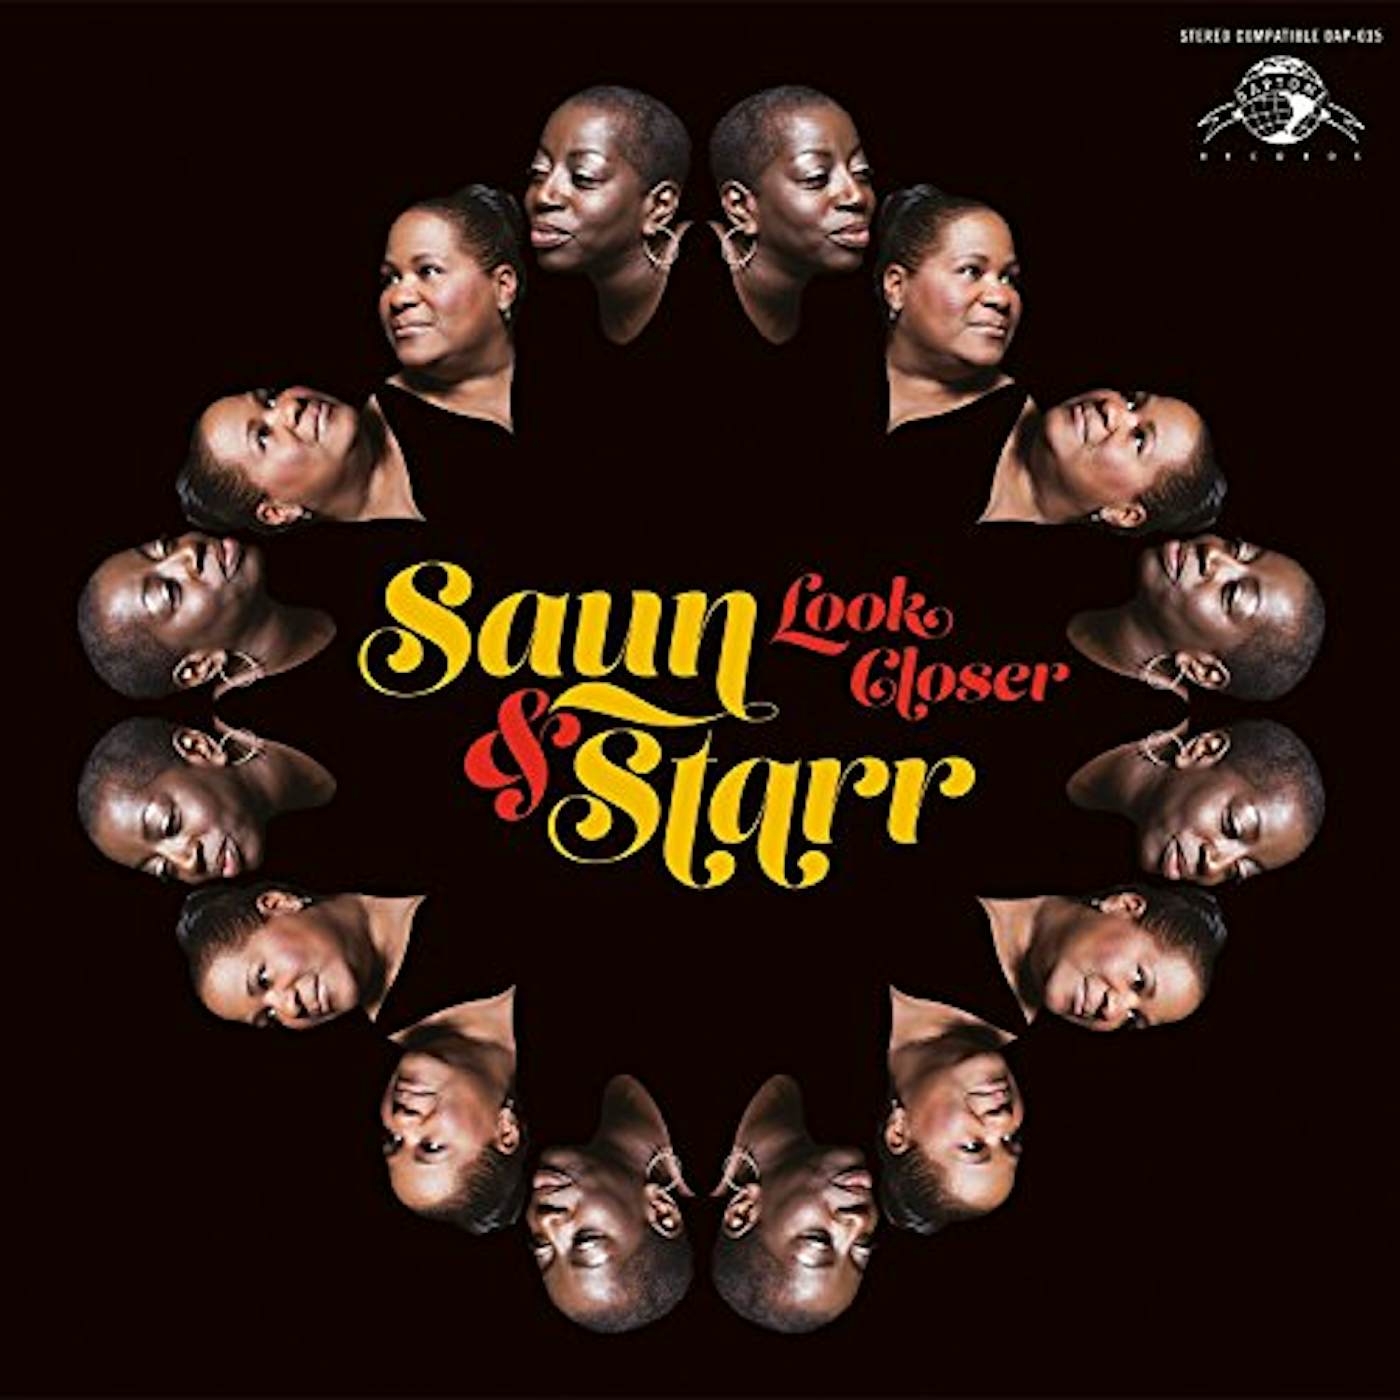 Saun & Starr Look Closer Vinyl Record